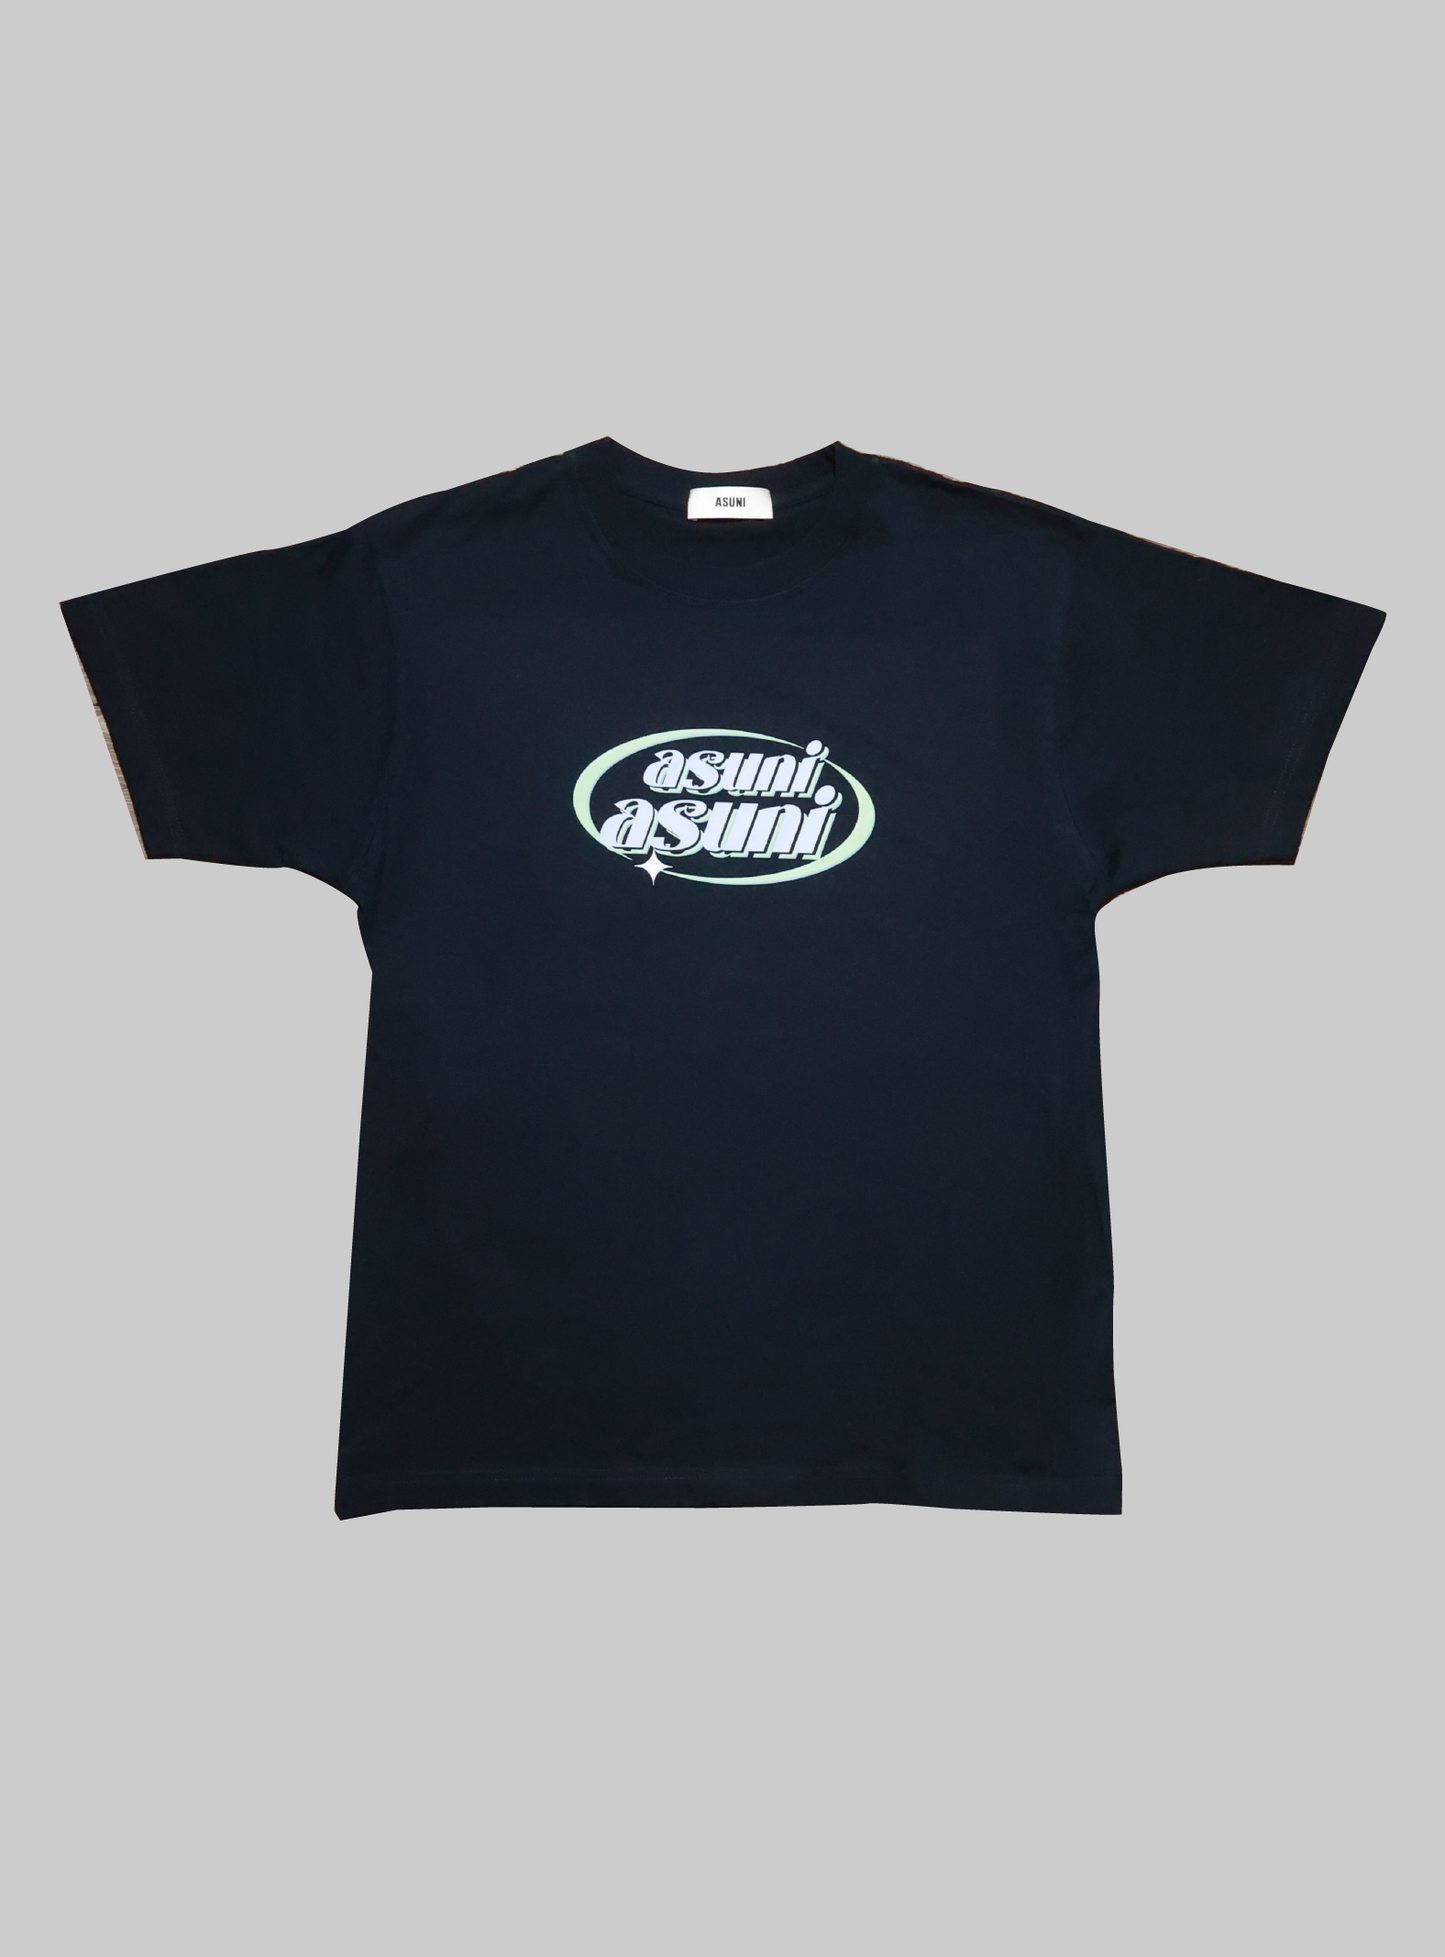 'asuni asuni'-print Short Sleeve Oversized T-shirt In Navy